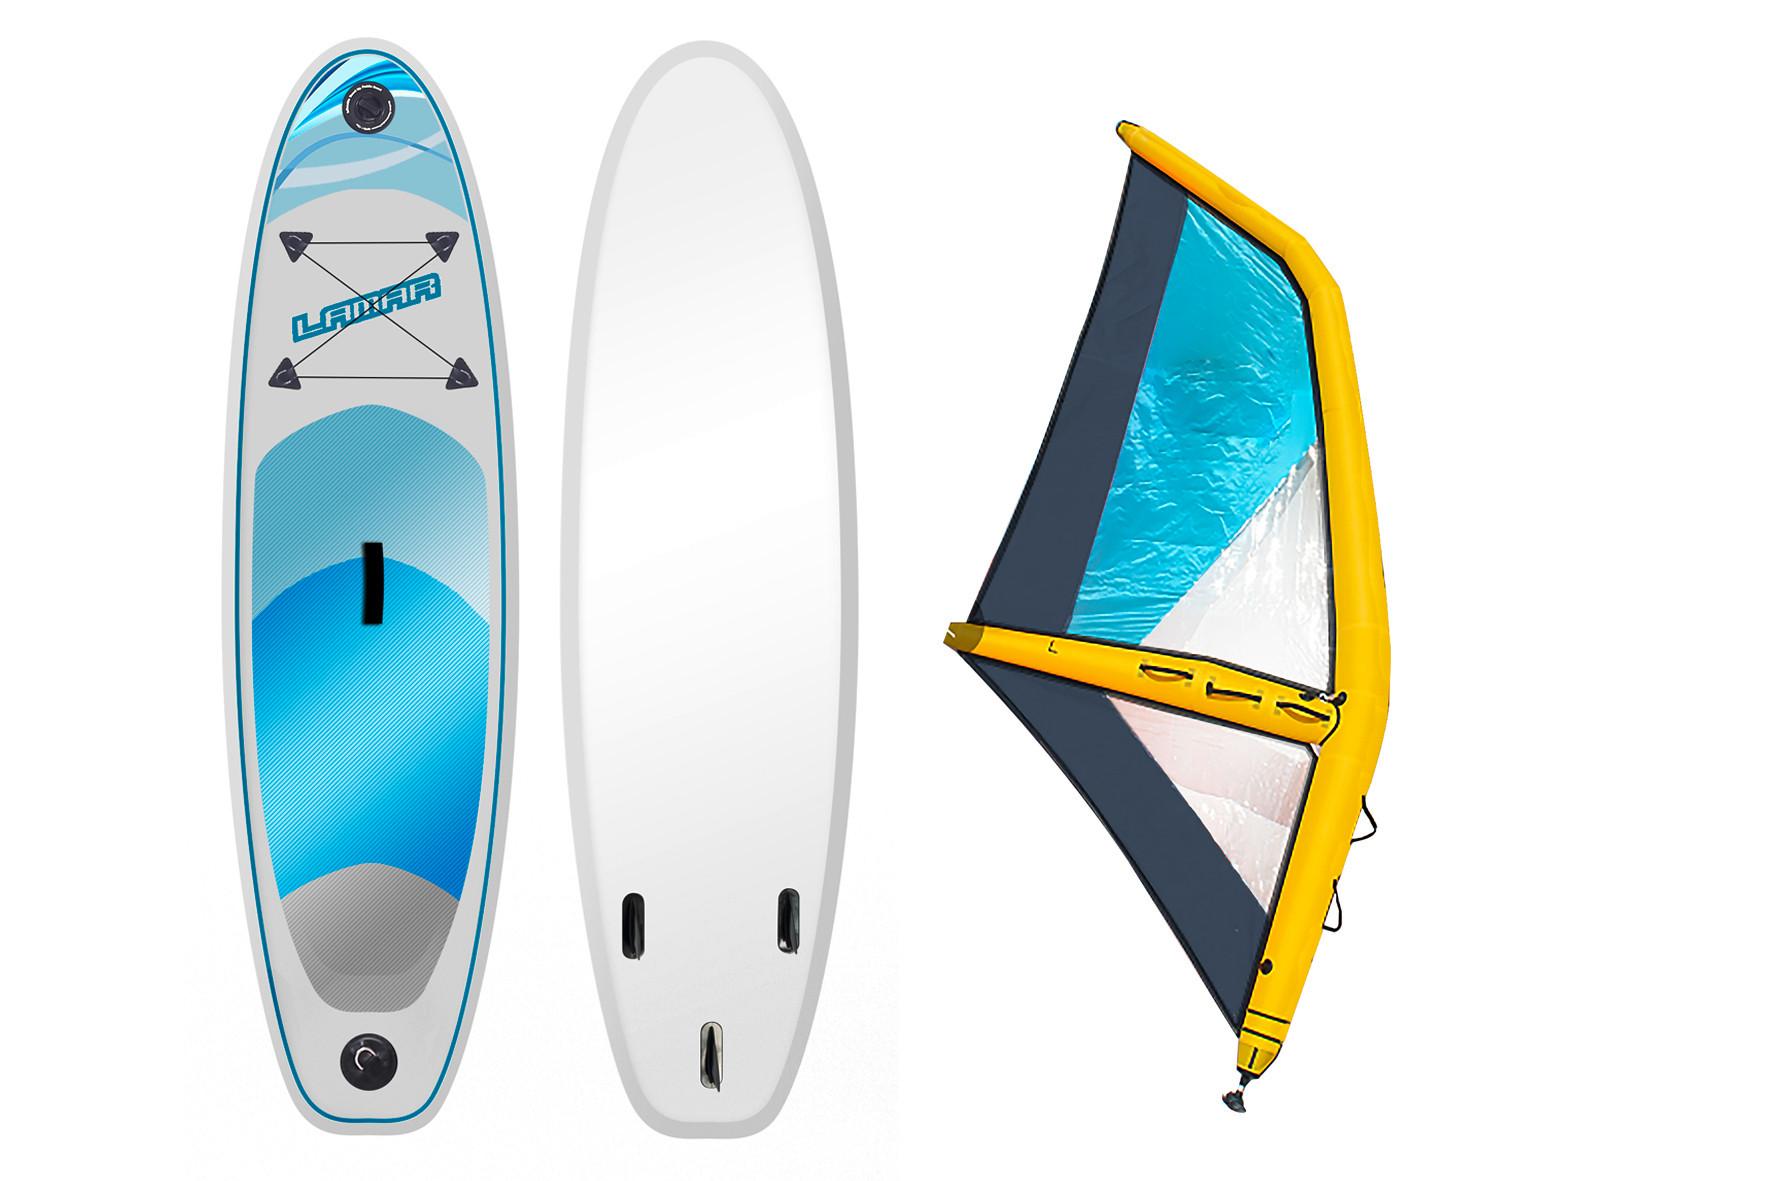 Lamar Stand Up Paddle Board Aufblasbar mit Segel Weiß/Blau - Blau/Weiß, Basics, Kunststoff (290/76/15cm)